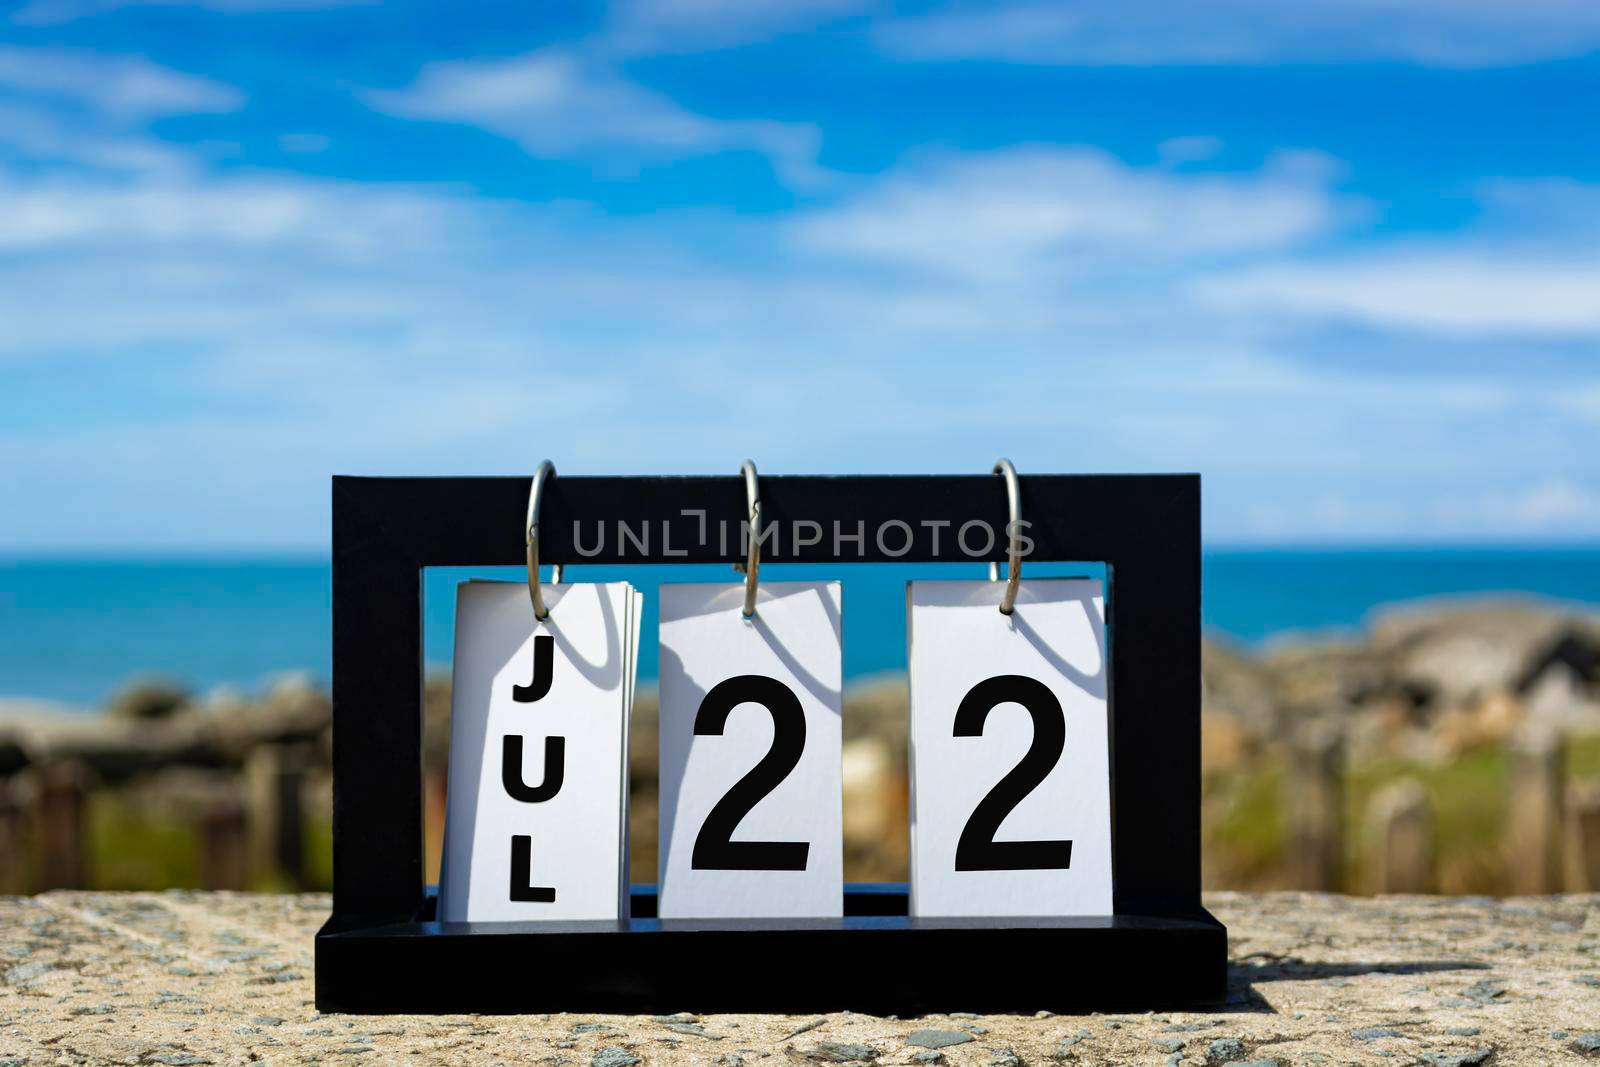 Jul 22 calendar date text on wooden frame with blurred background of ocean. Calendar date concept.